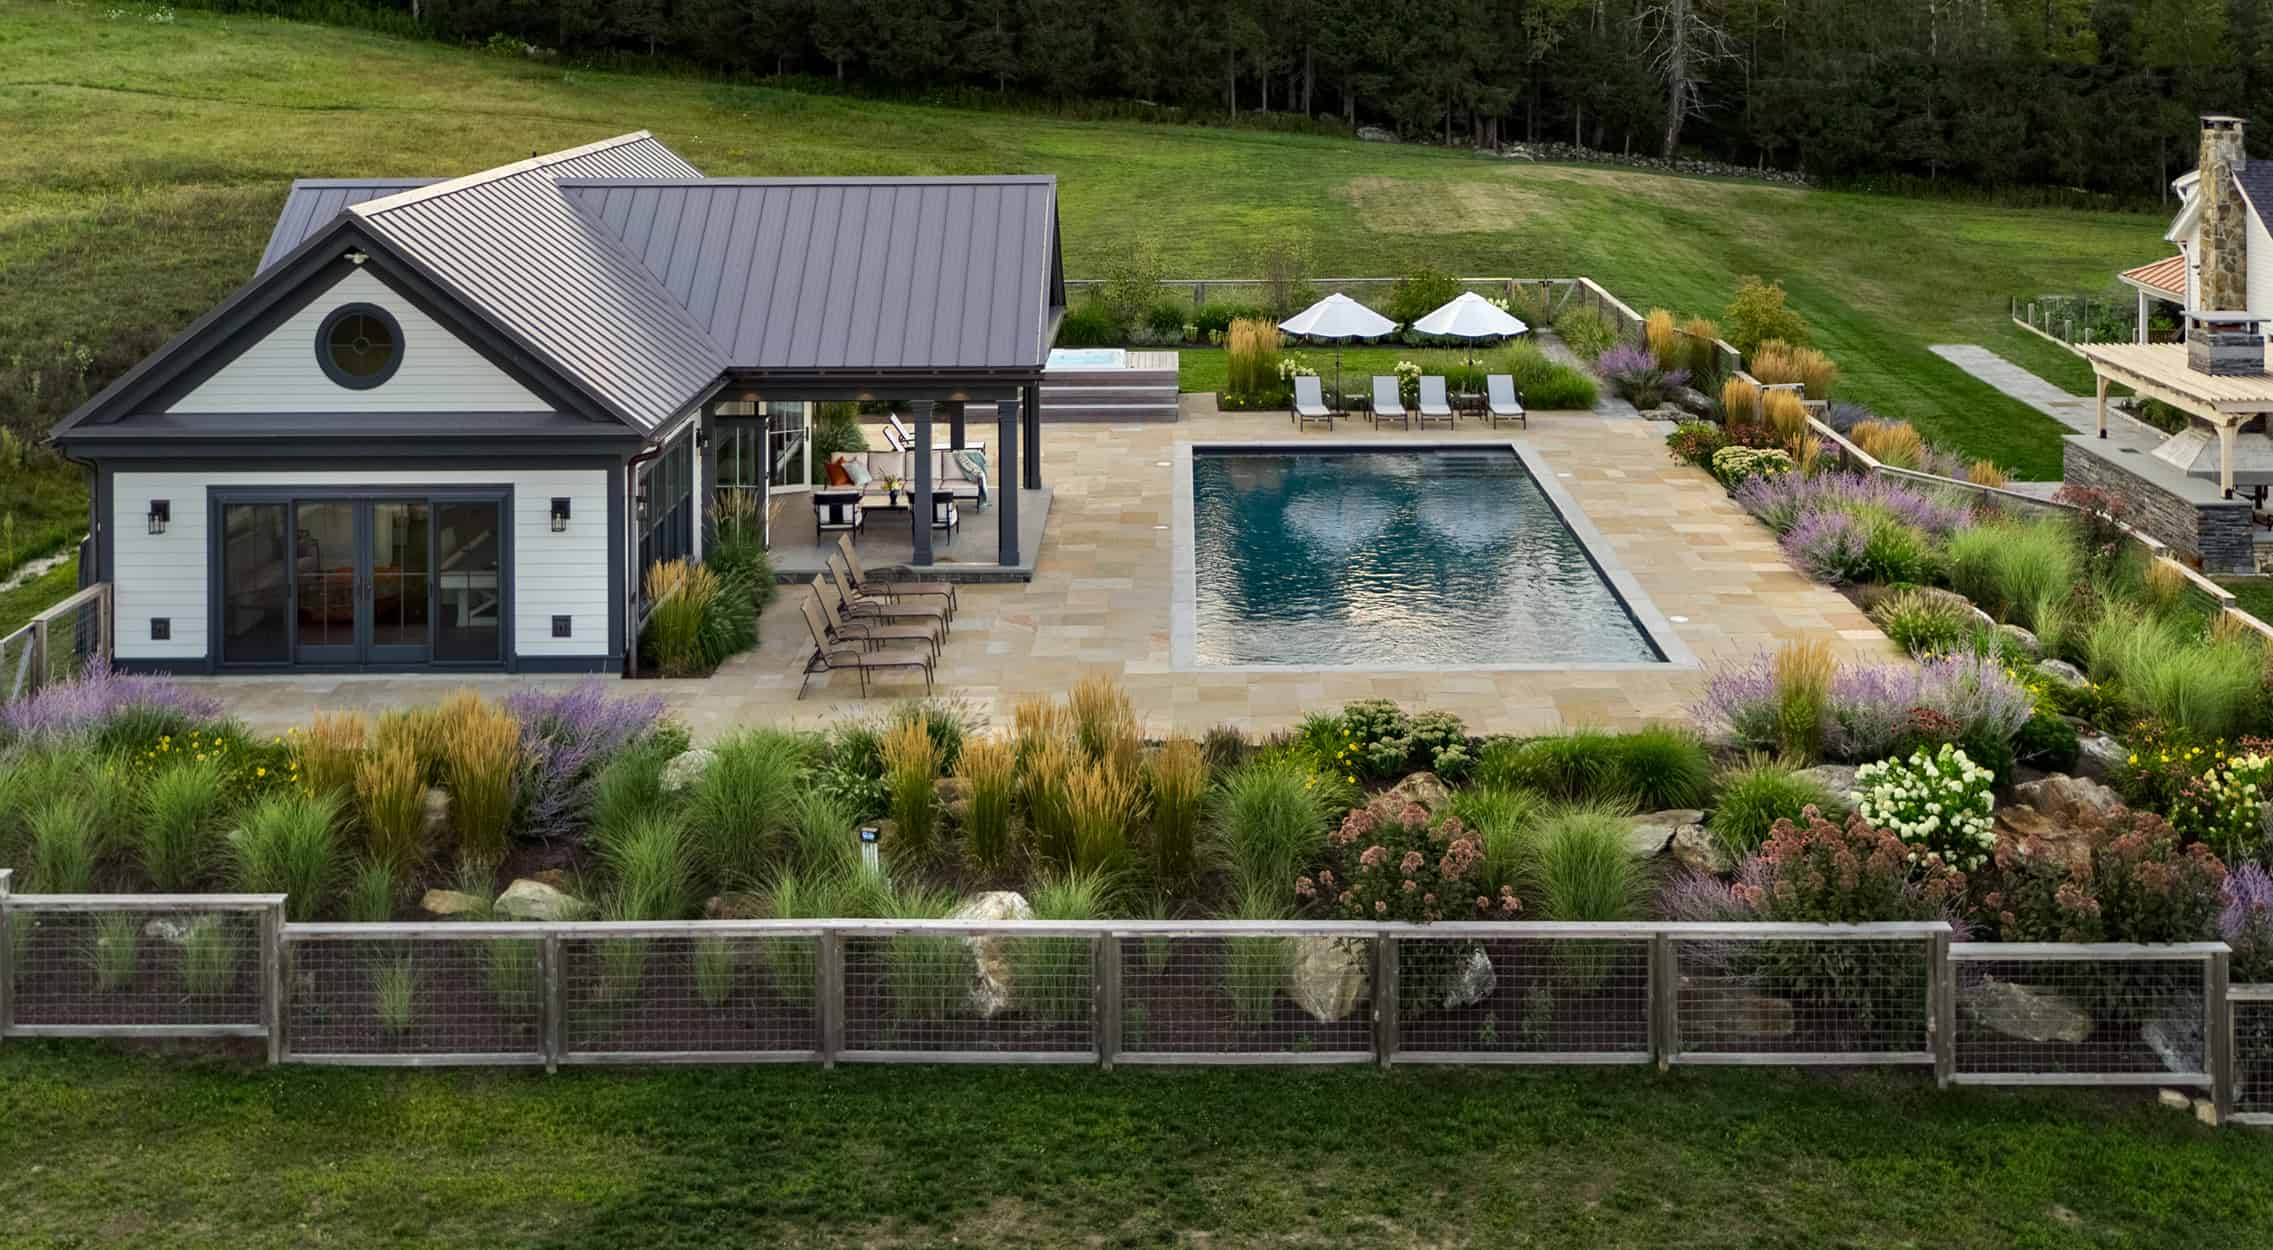 Pool House Garden by Greylock Design Associates